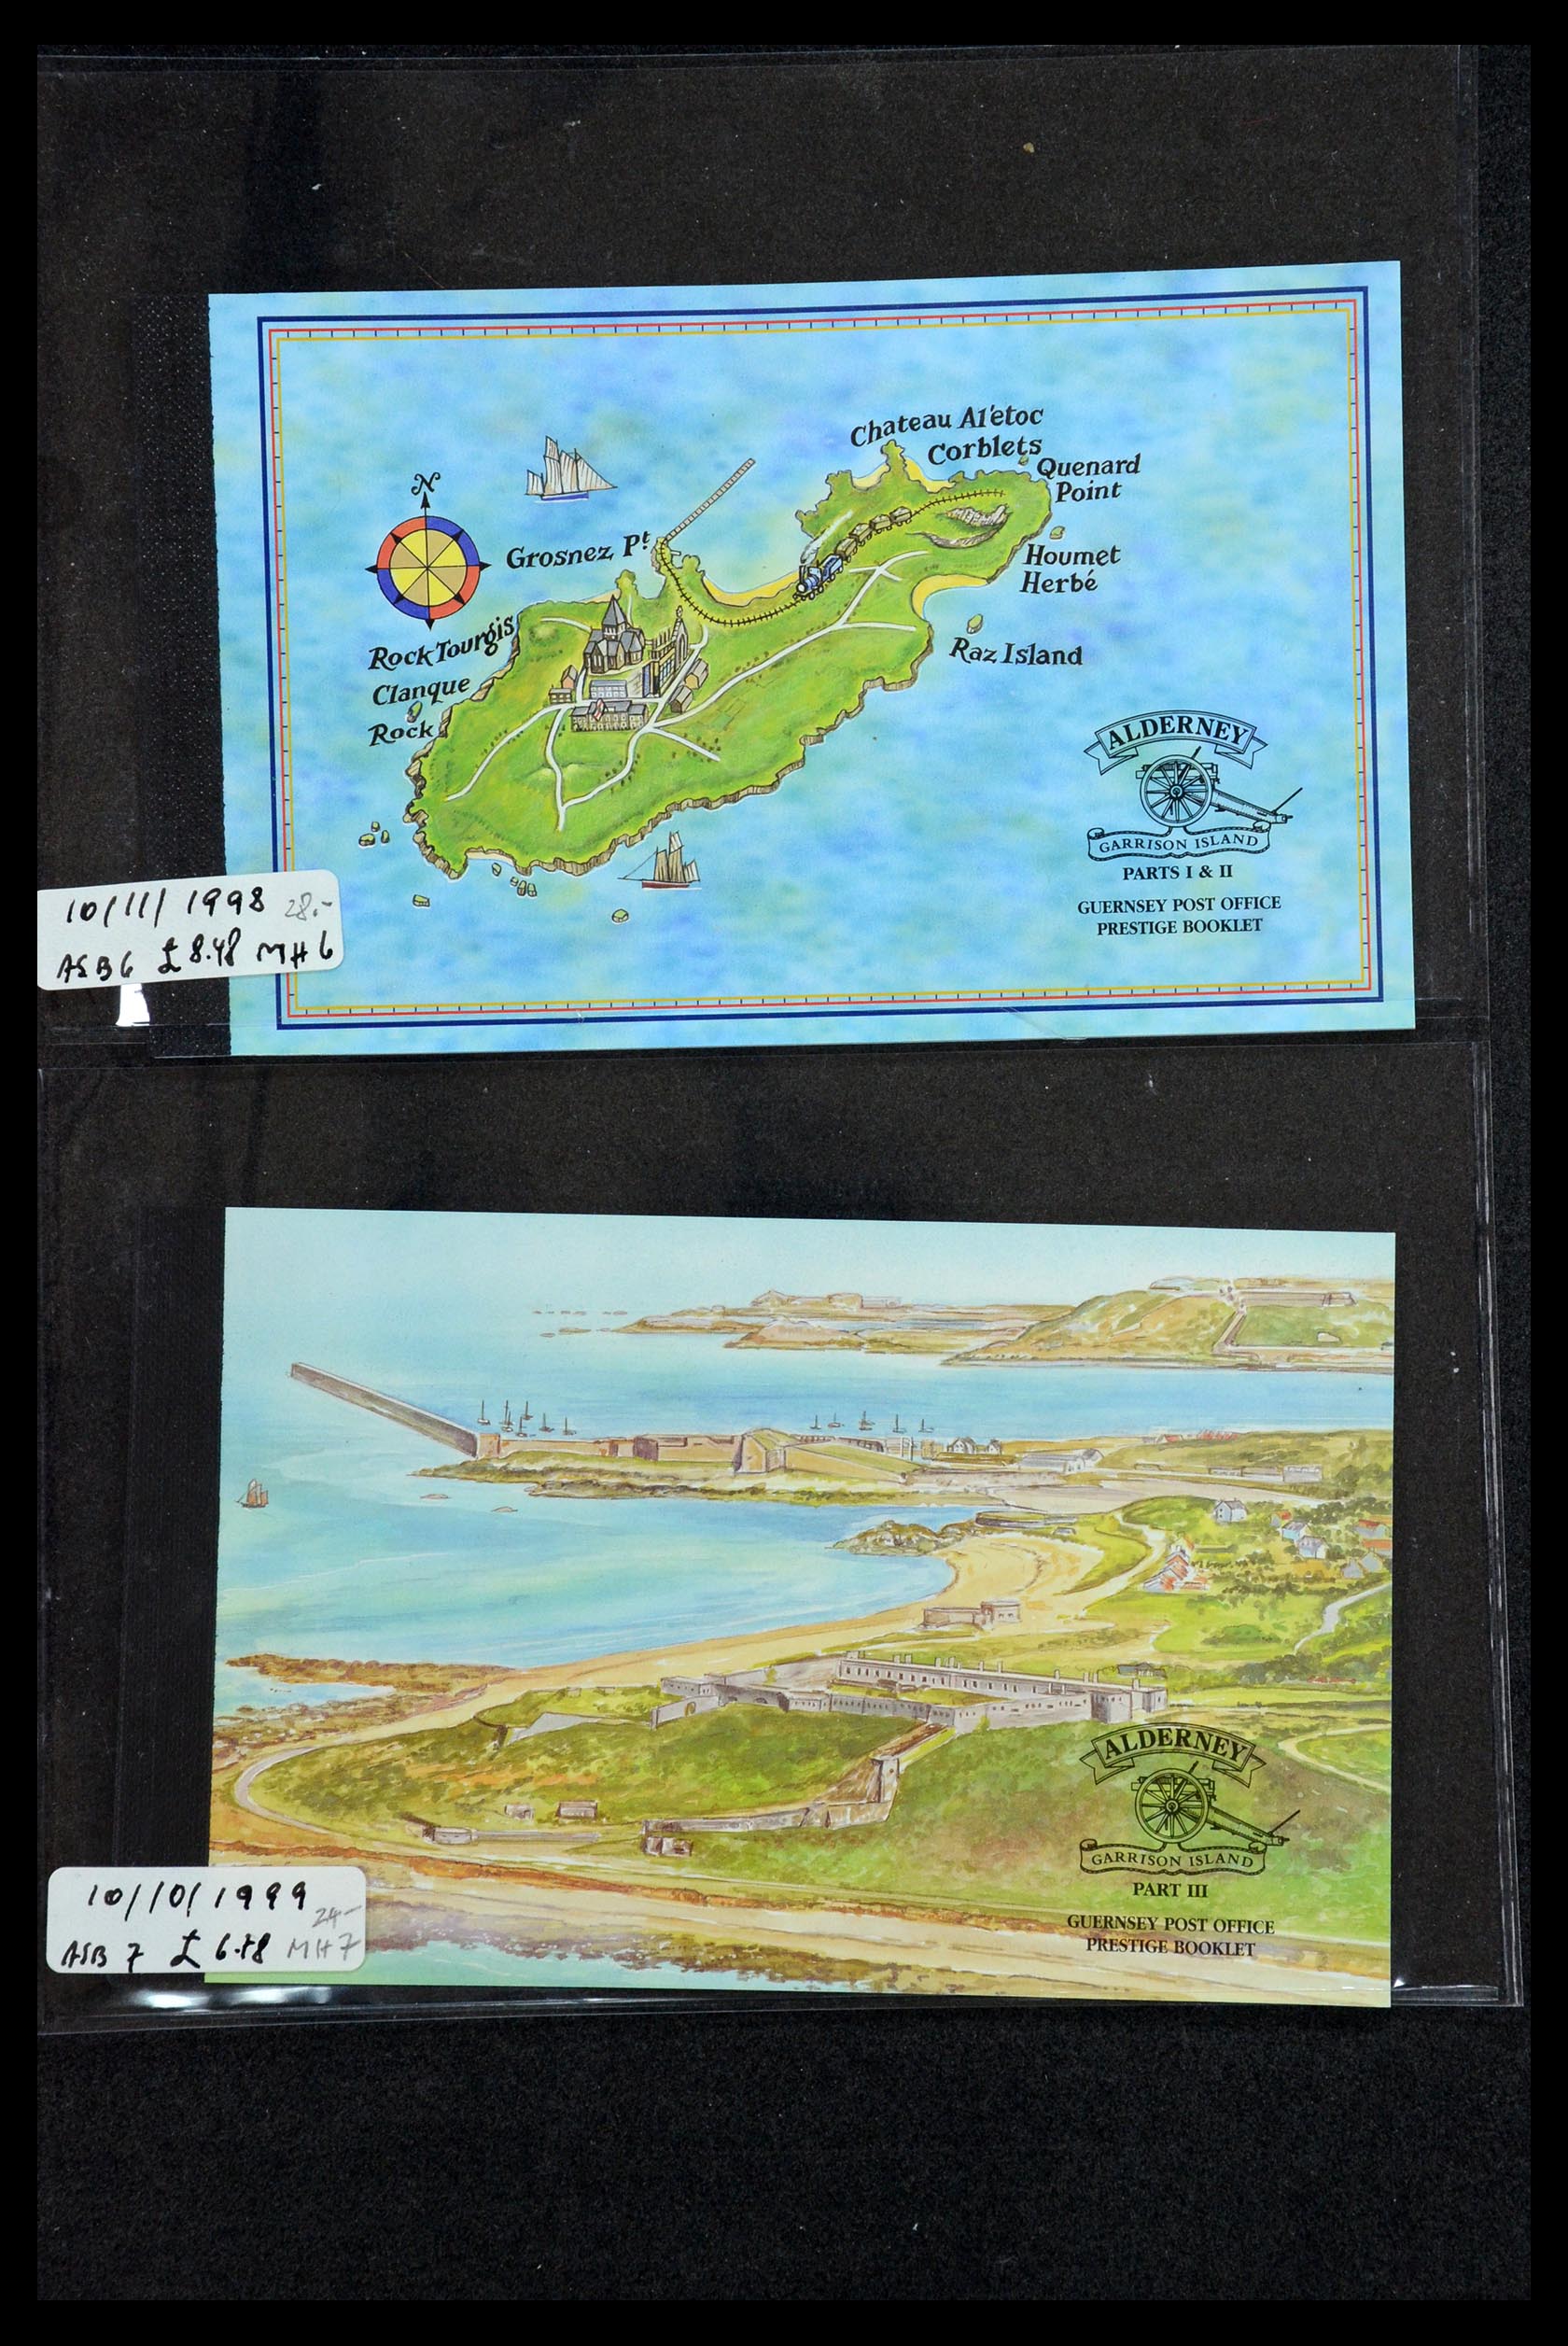 35976 045 - Stamp collection 35976 Guernsey and Alderney stamp booklets 1969-2015!